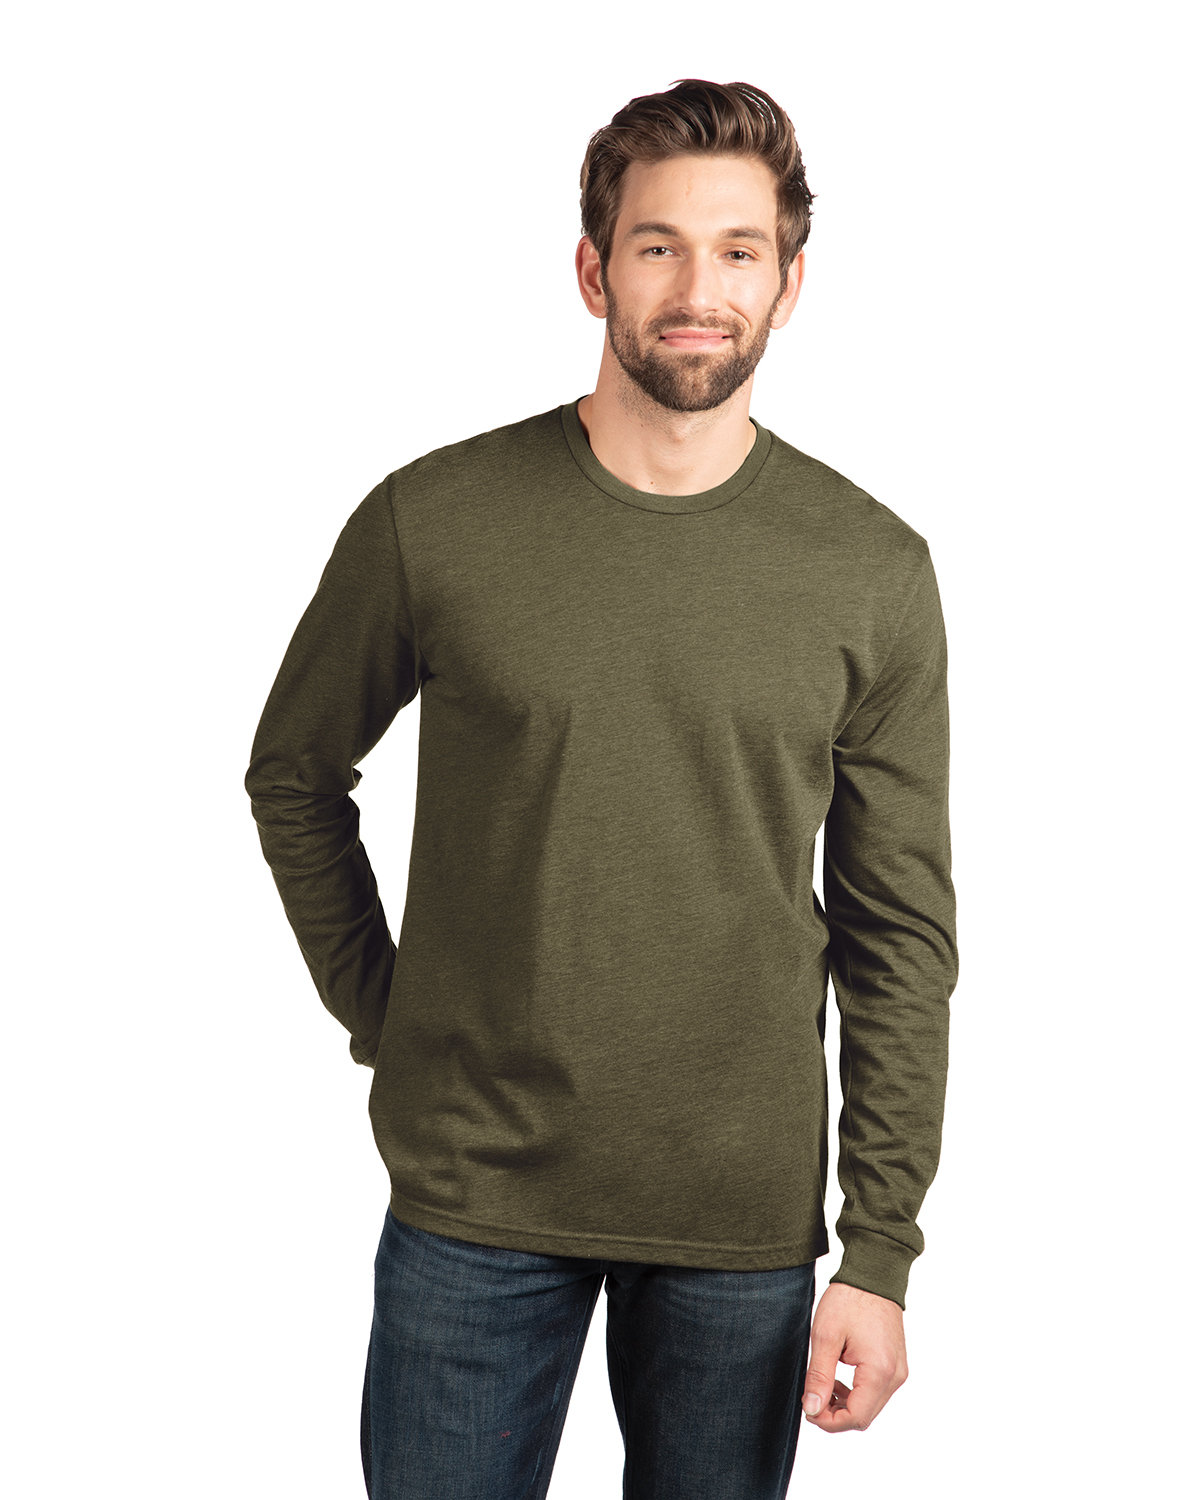 Next Level Apparel Unisex CVC Long-Sleeve T-Shirt MILITARY GREEN 